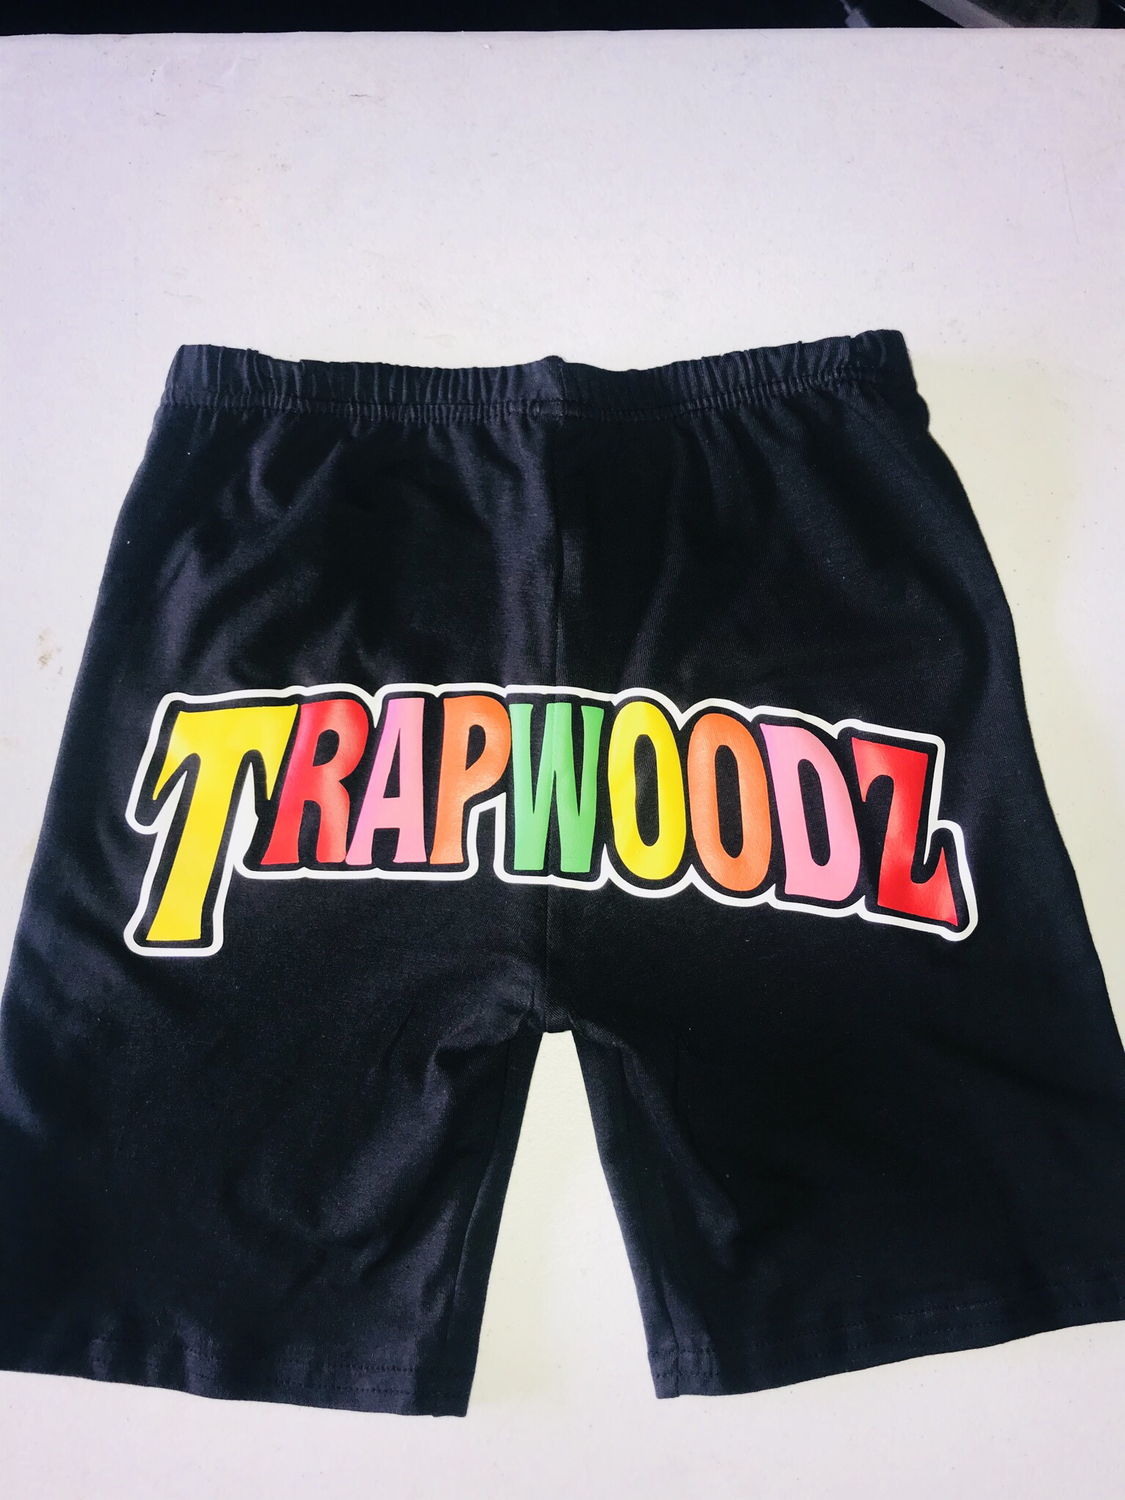 trapwoodz biker shorts